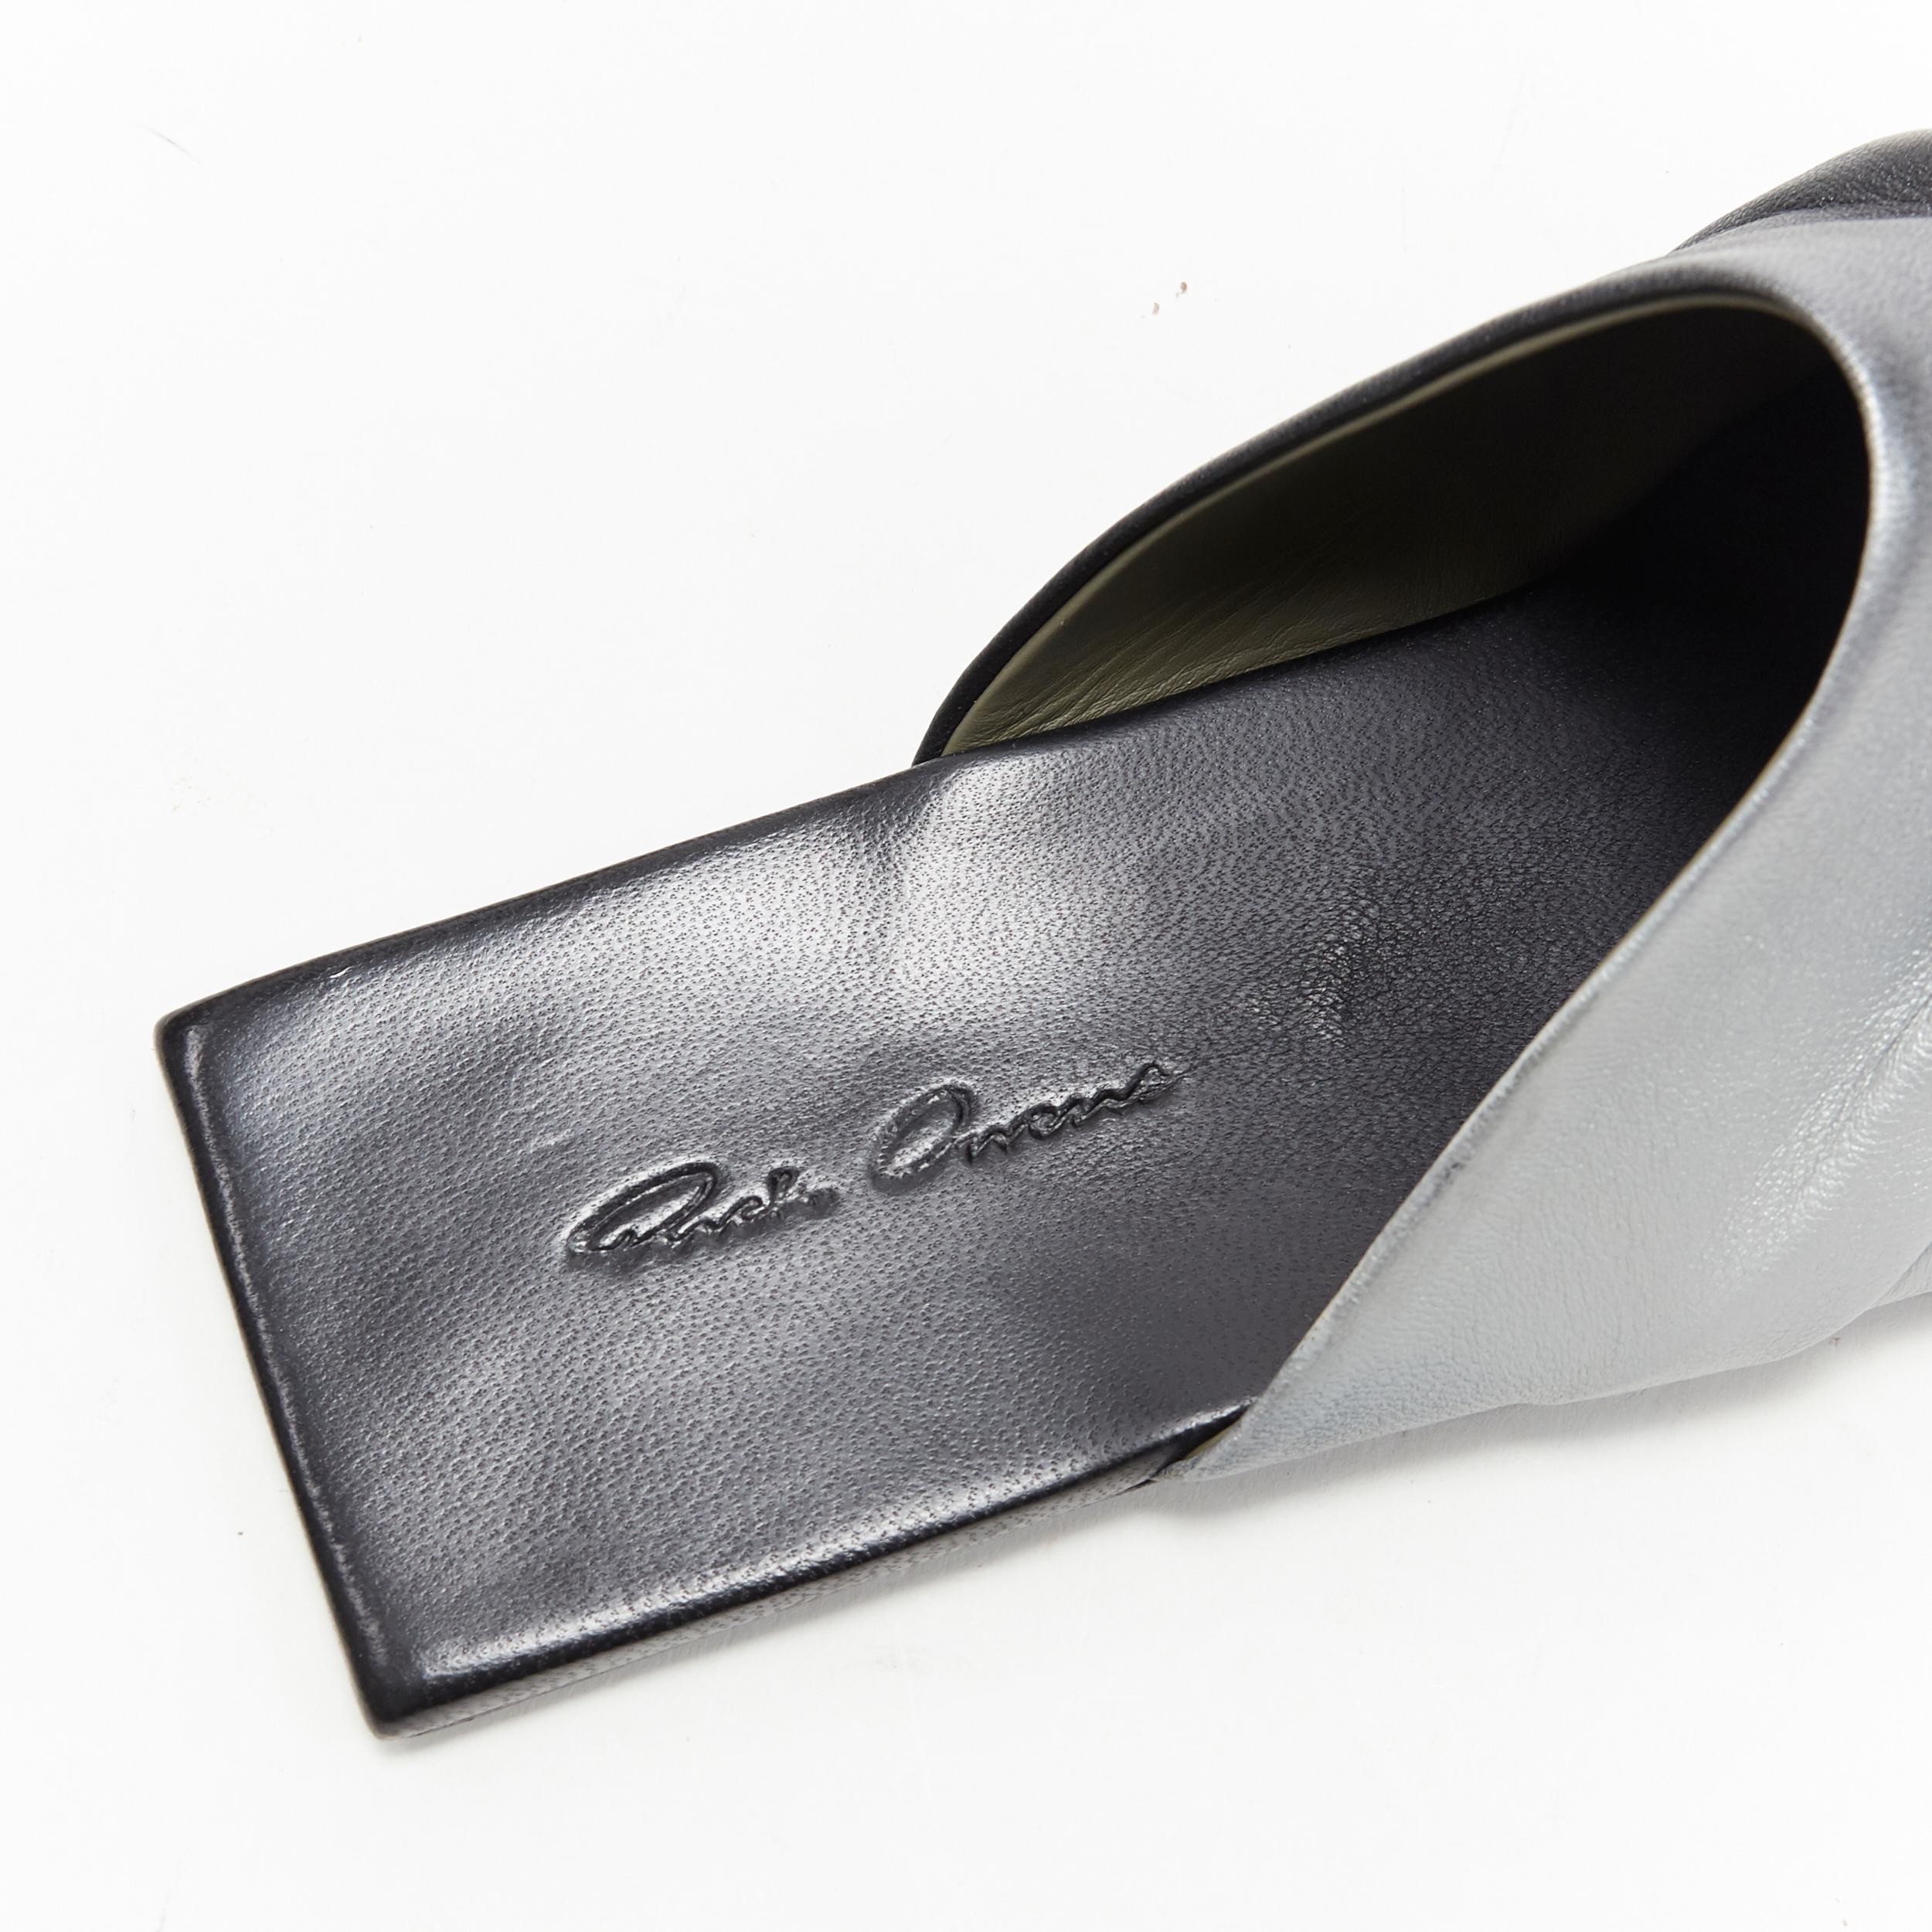 new RICK OWENS black silver painted leather draped square toe flats slipper EU37 1